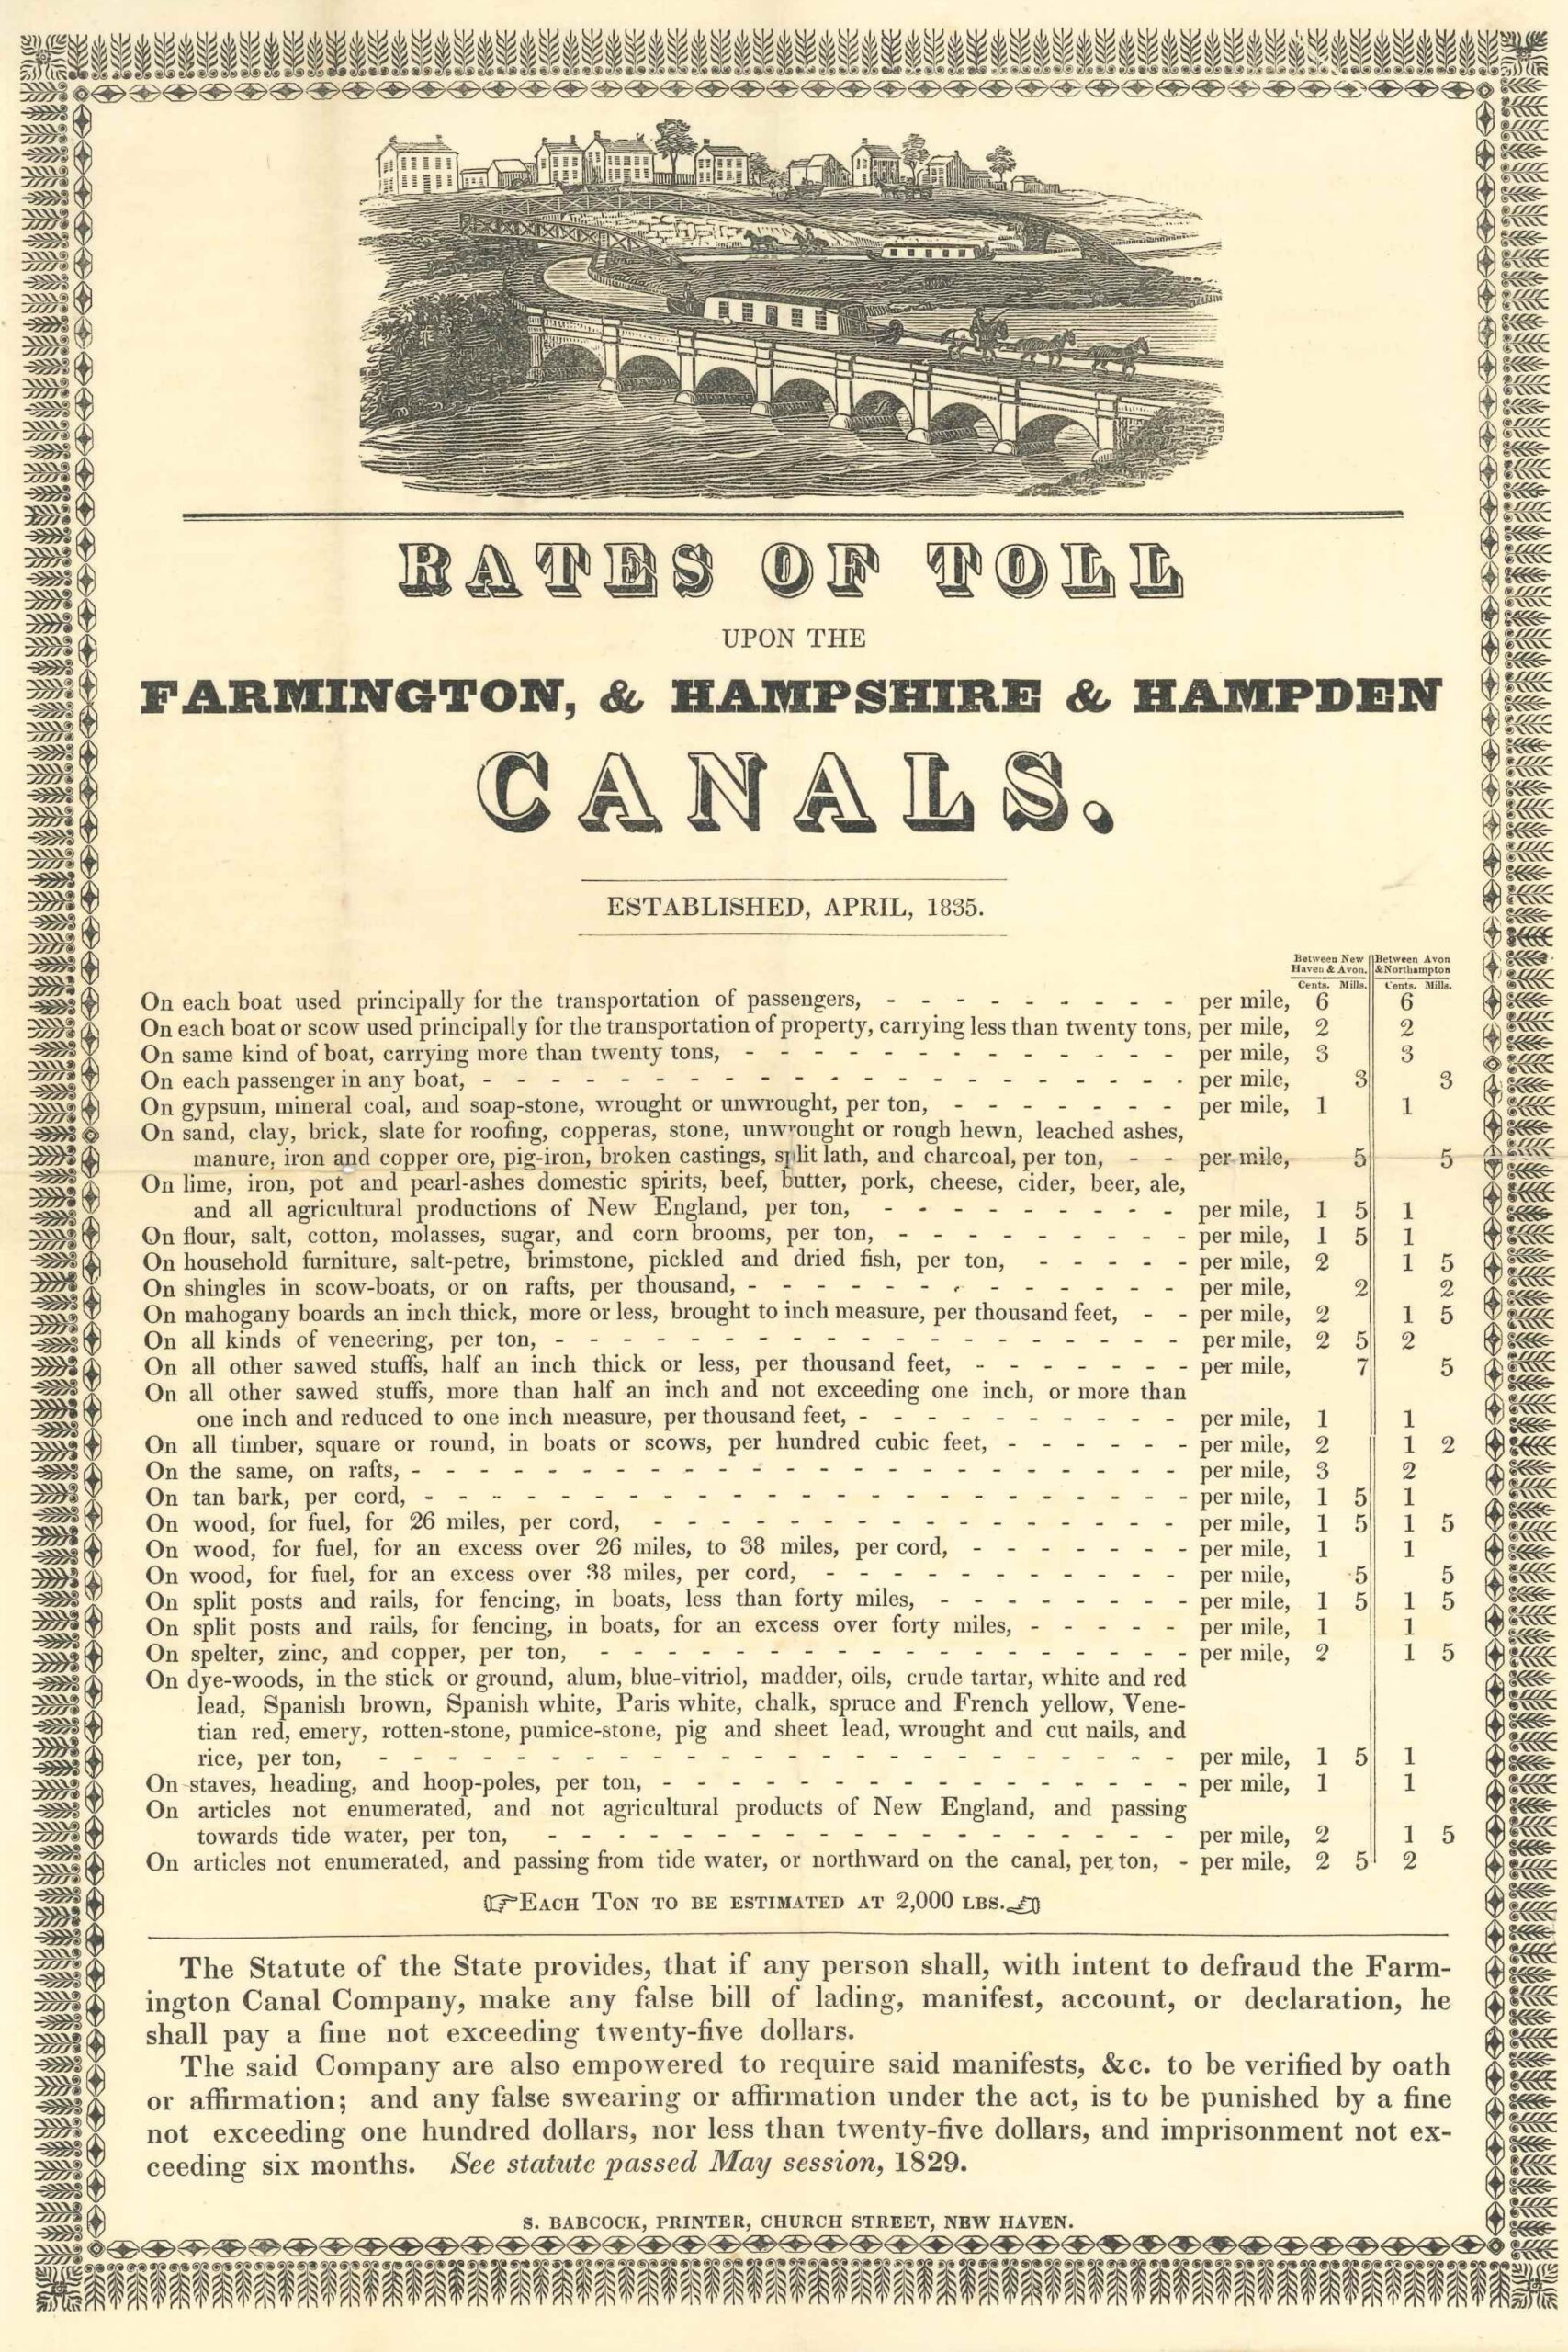 Farmington Canal - Rates of Toll